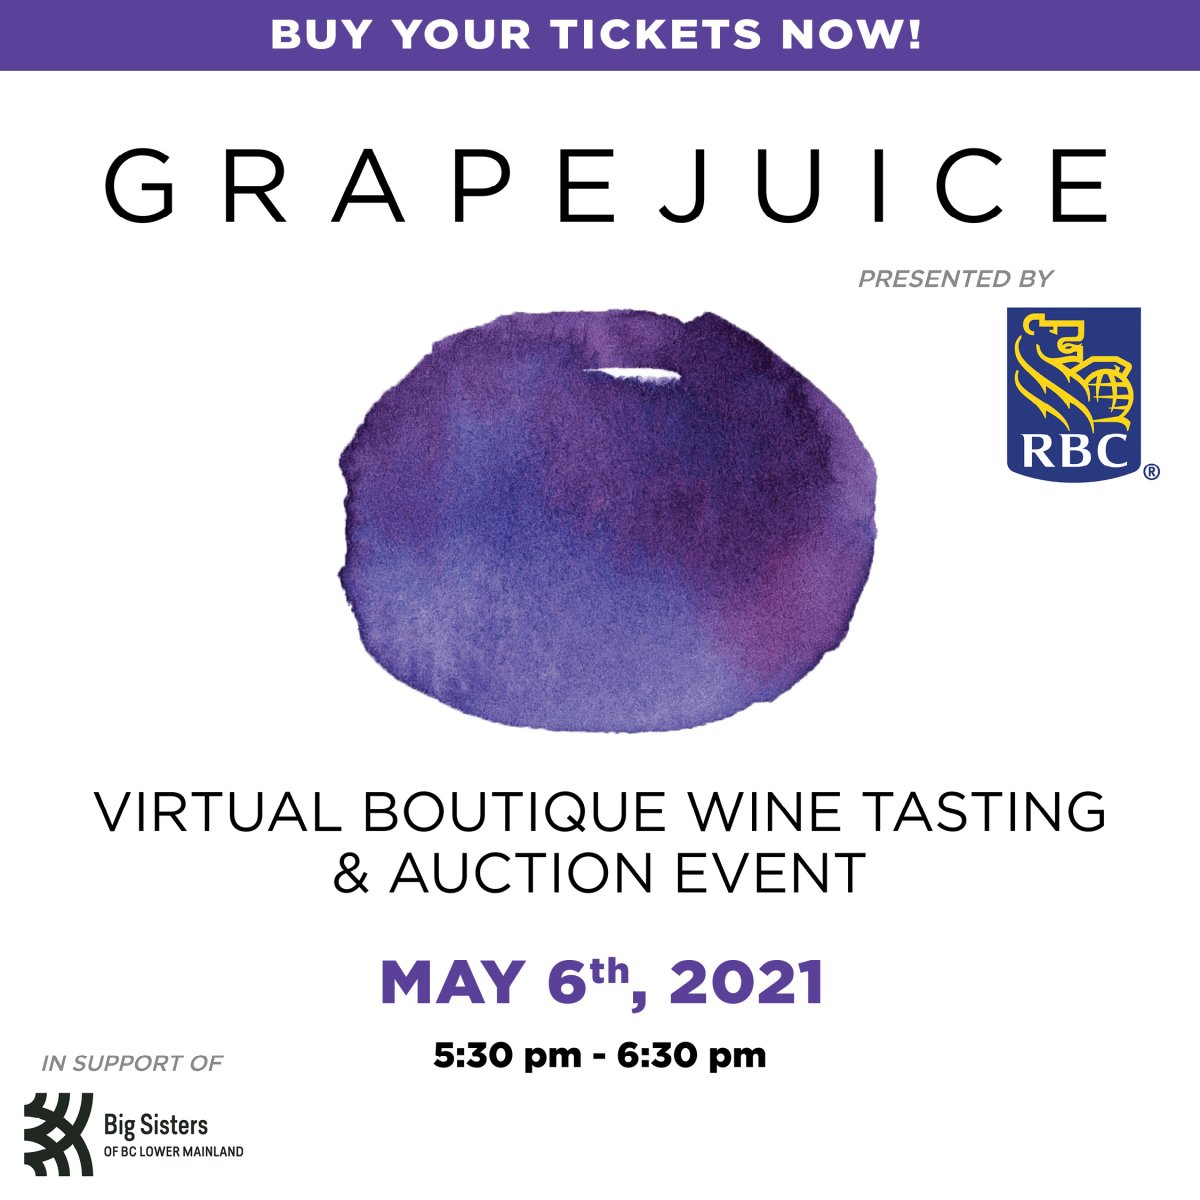 Global BC & 980 CKNW sponsors GrapeJuice - image